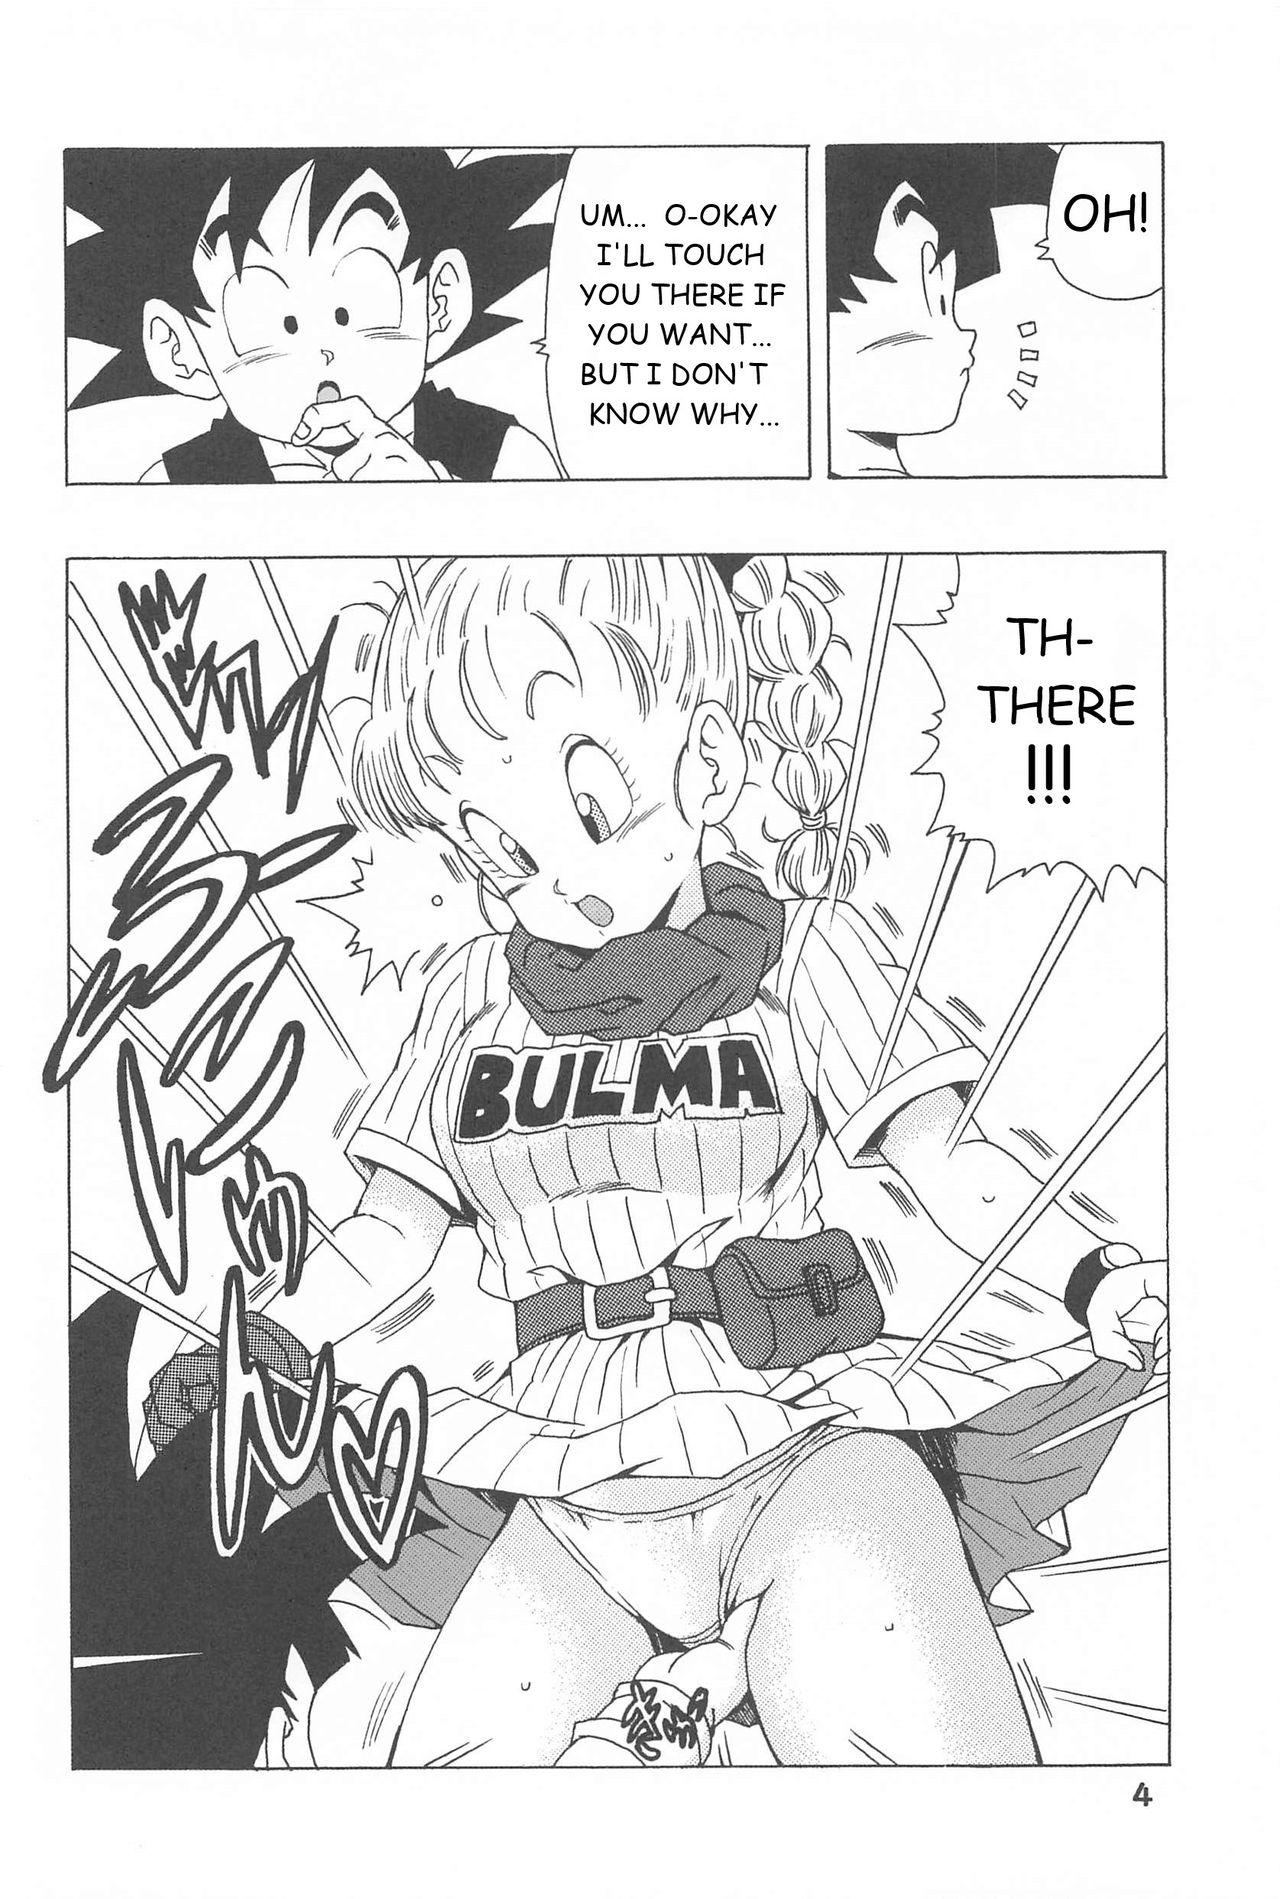 Playing Bulma no Saikyou e no Michi - Dragon ball Hoe - Page 4